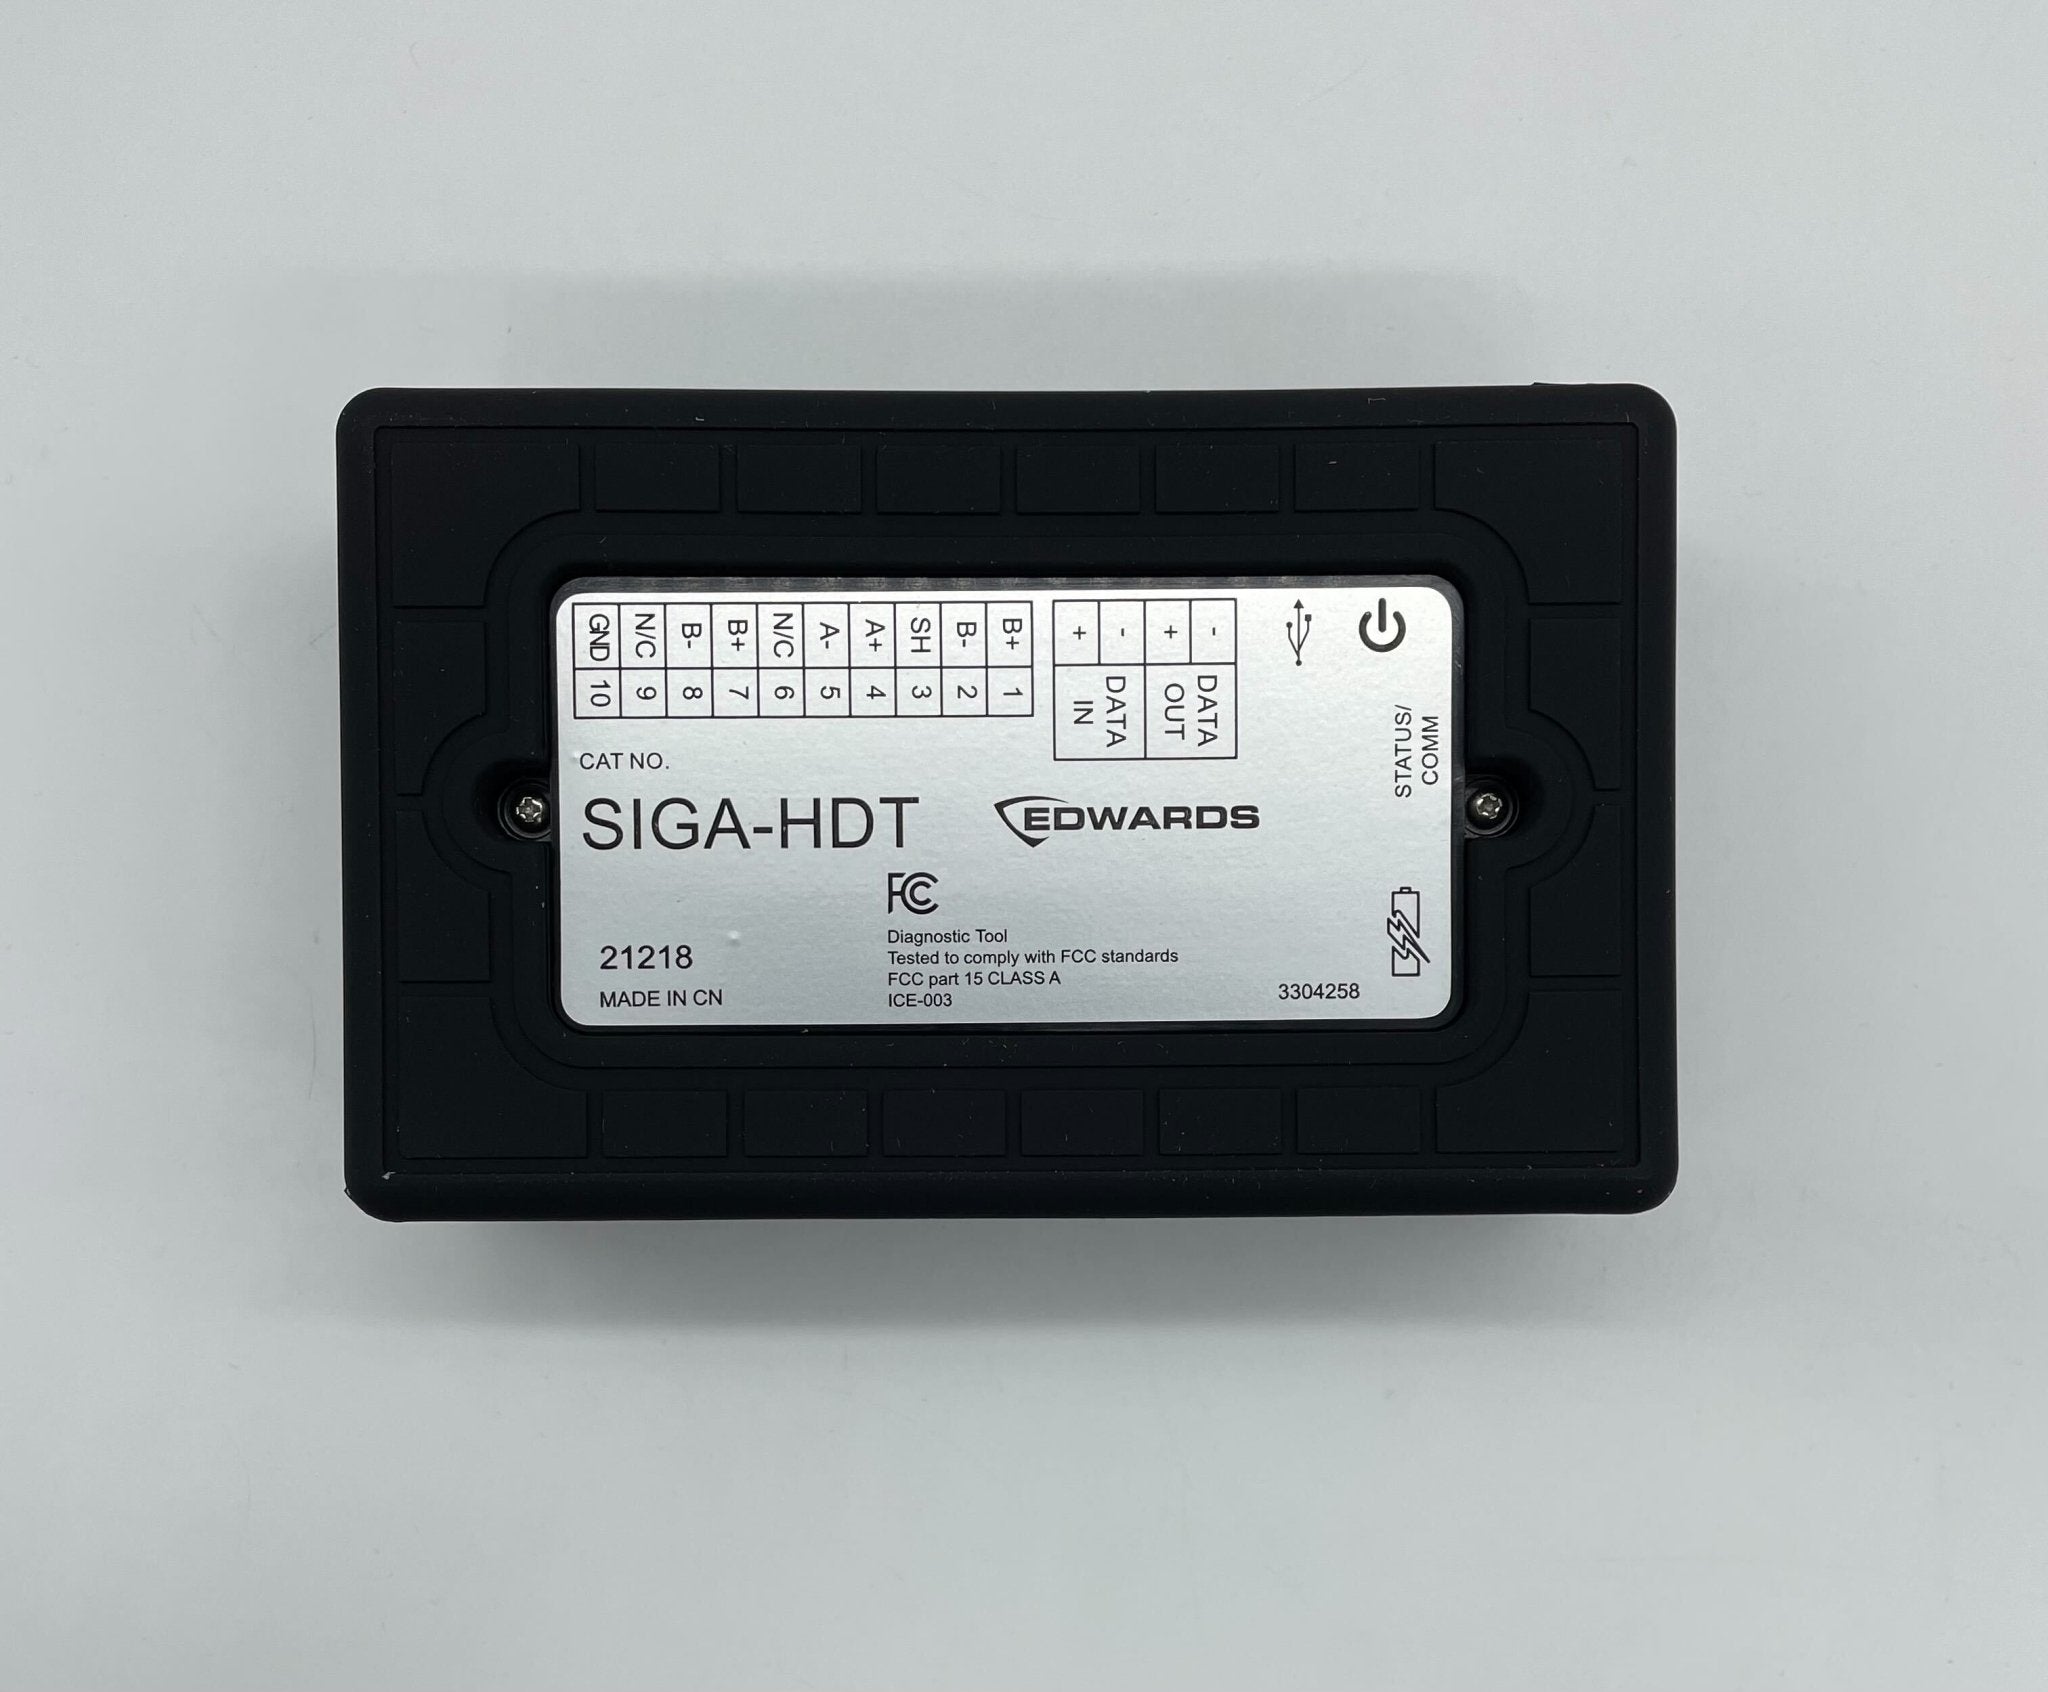 Edwards SIGA-HDT - The Fire Alarm Supplier